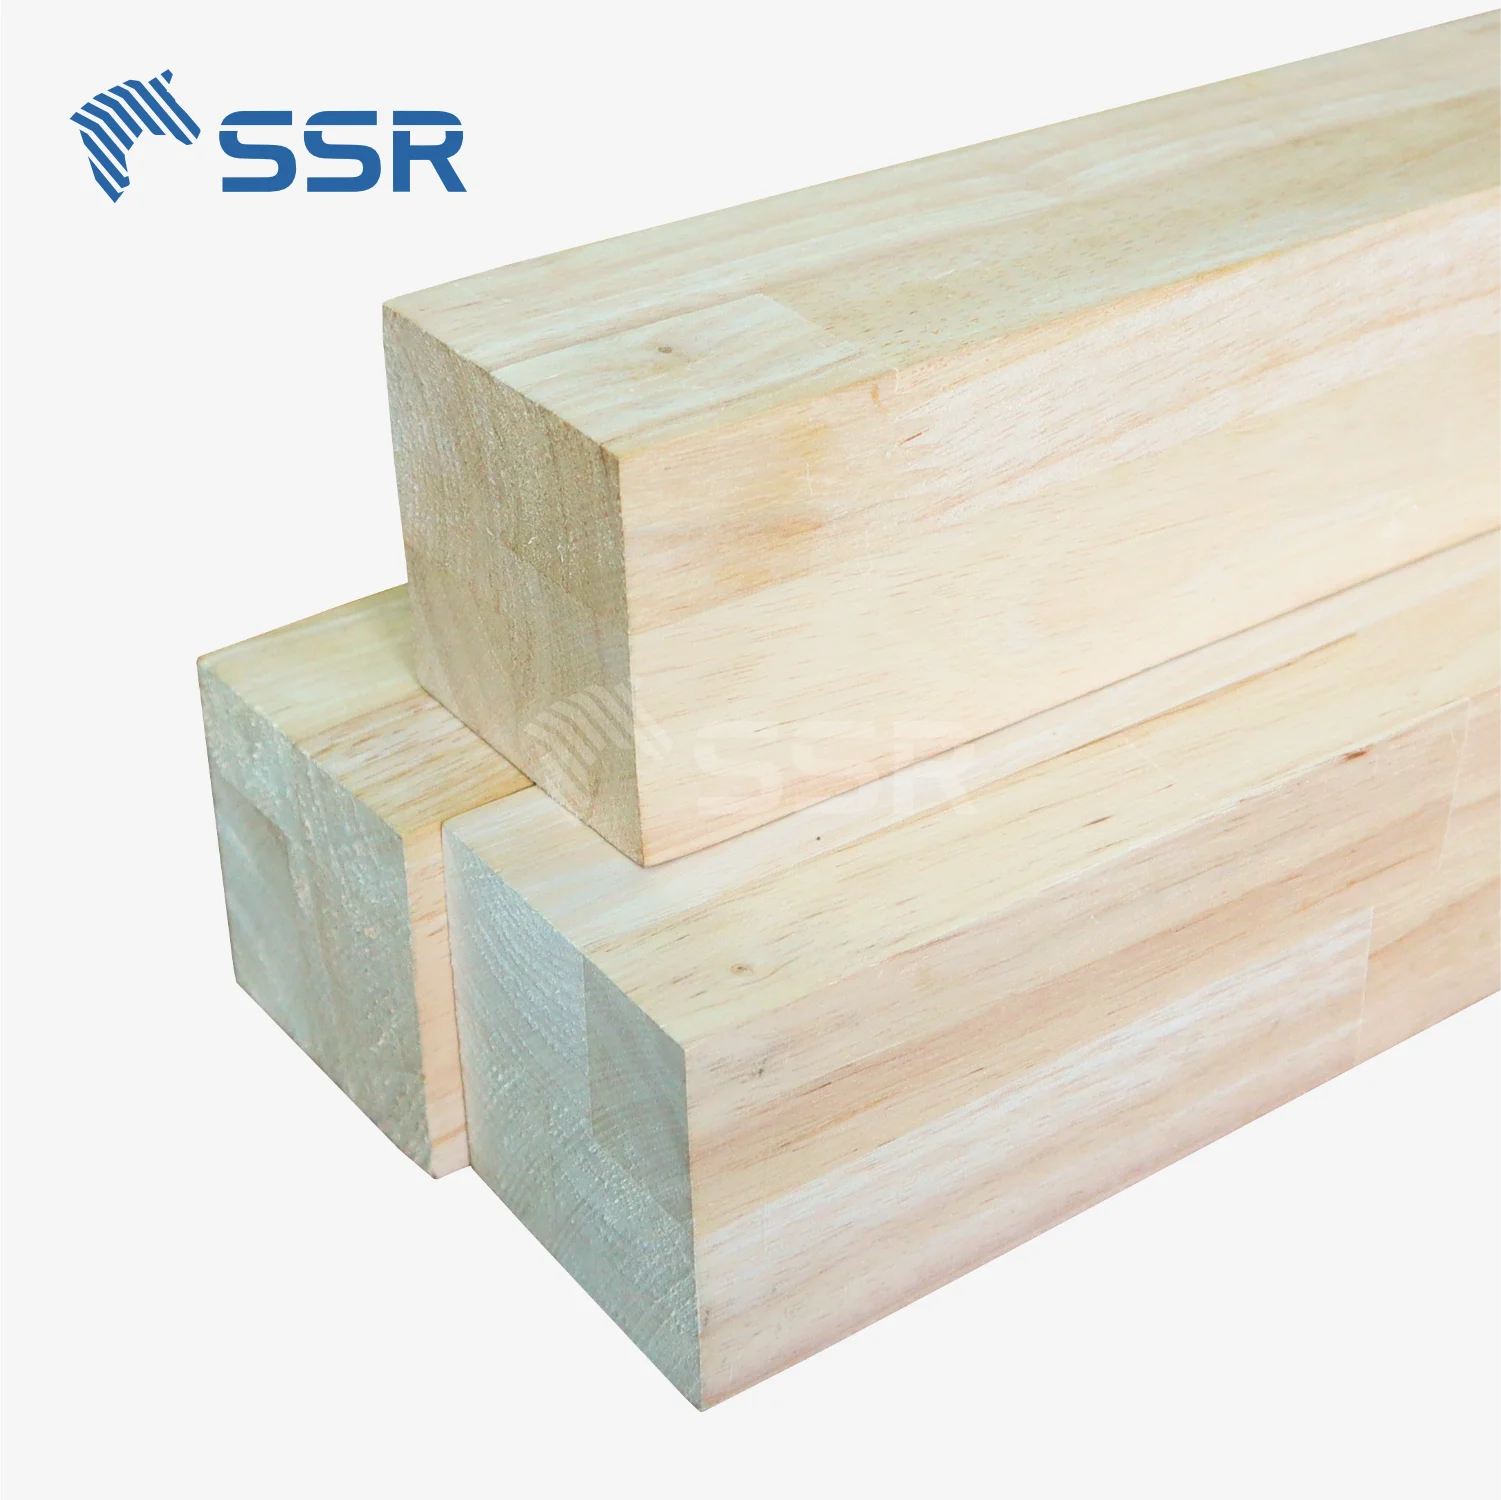 SSR VINA - Rubber Wood/Acacia/Sapele Scantling - Finger Joint Wood Blocks For Window Scantlings / Laminated Wood